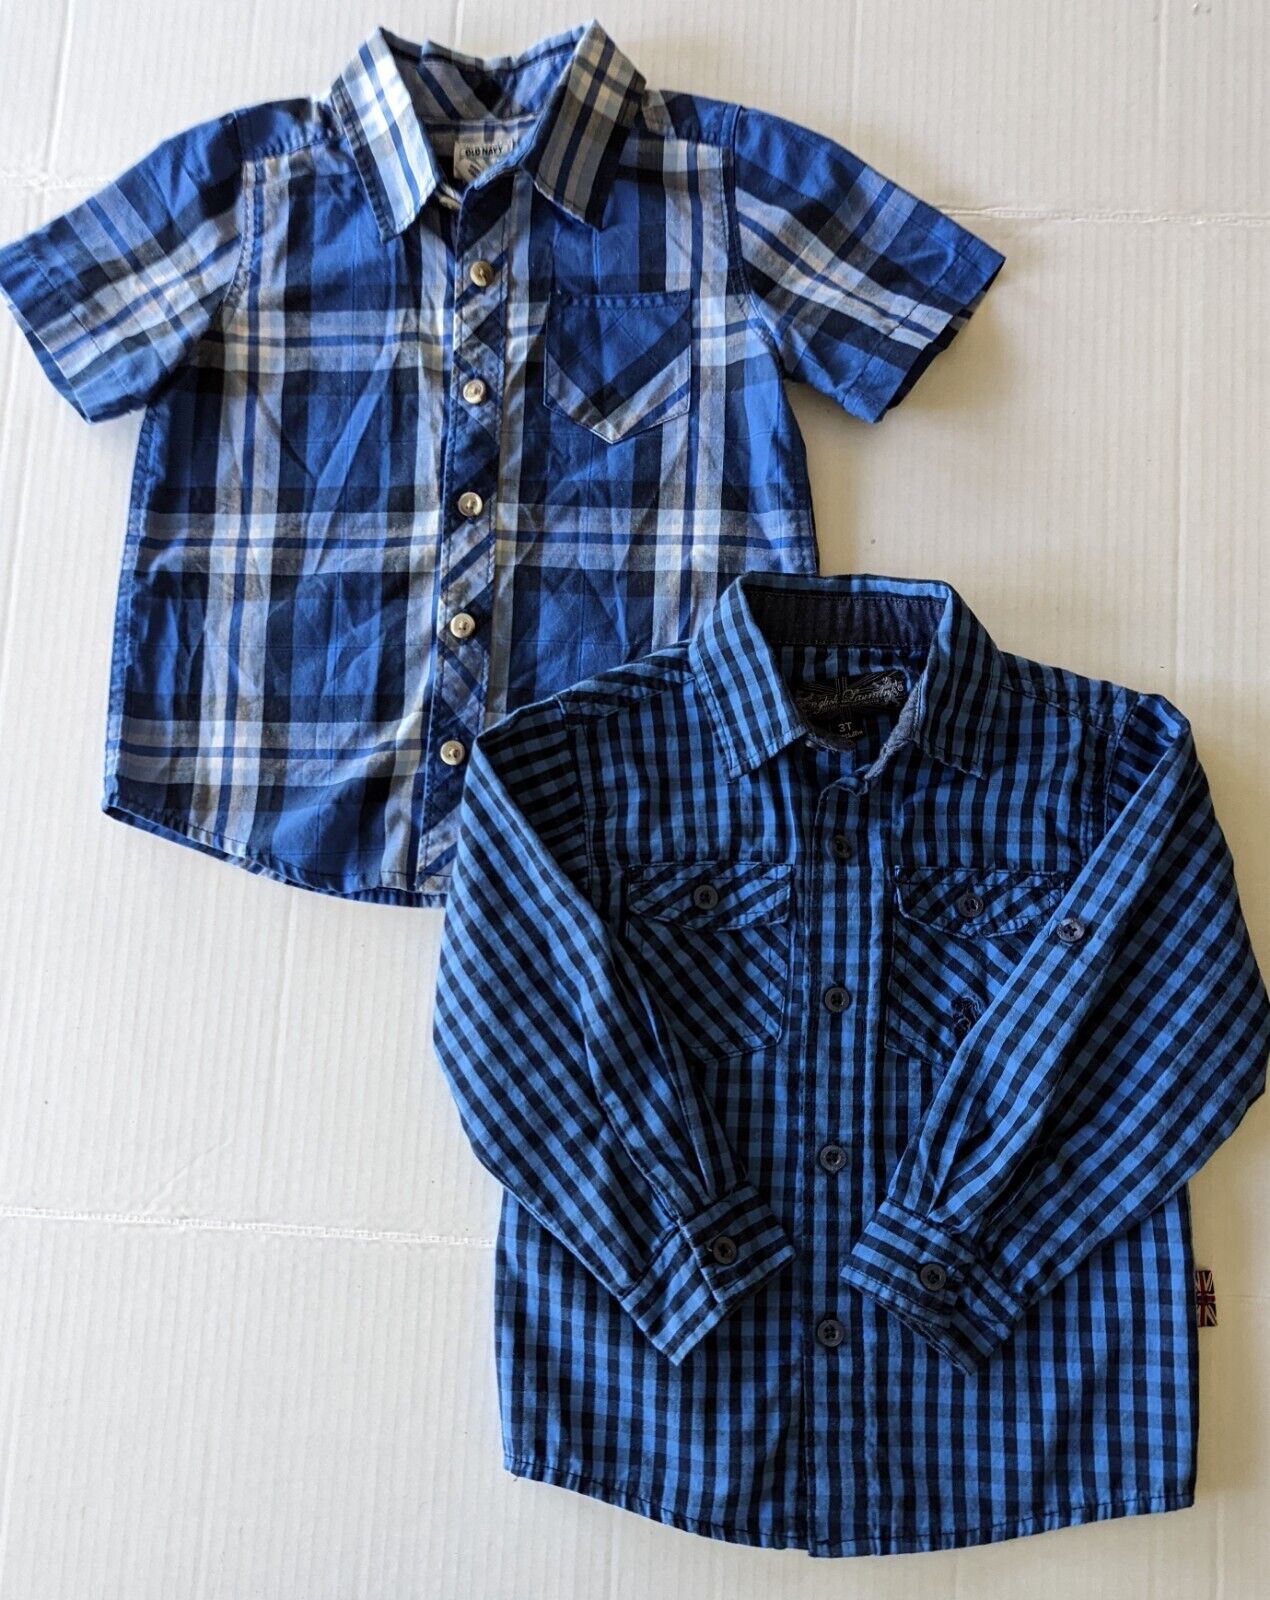 2 Pc's 3T: 2 Blue Plaid Shirts-1 Long & 1 Short Sleeve English Laundry, Old Navy English Laundry, Old Navy